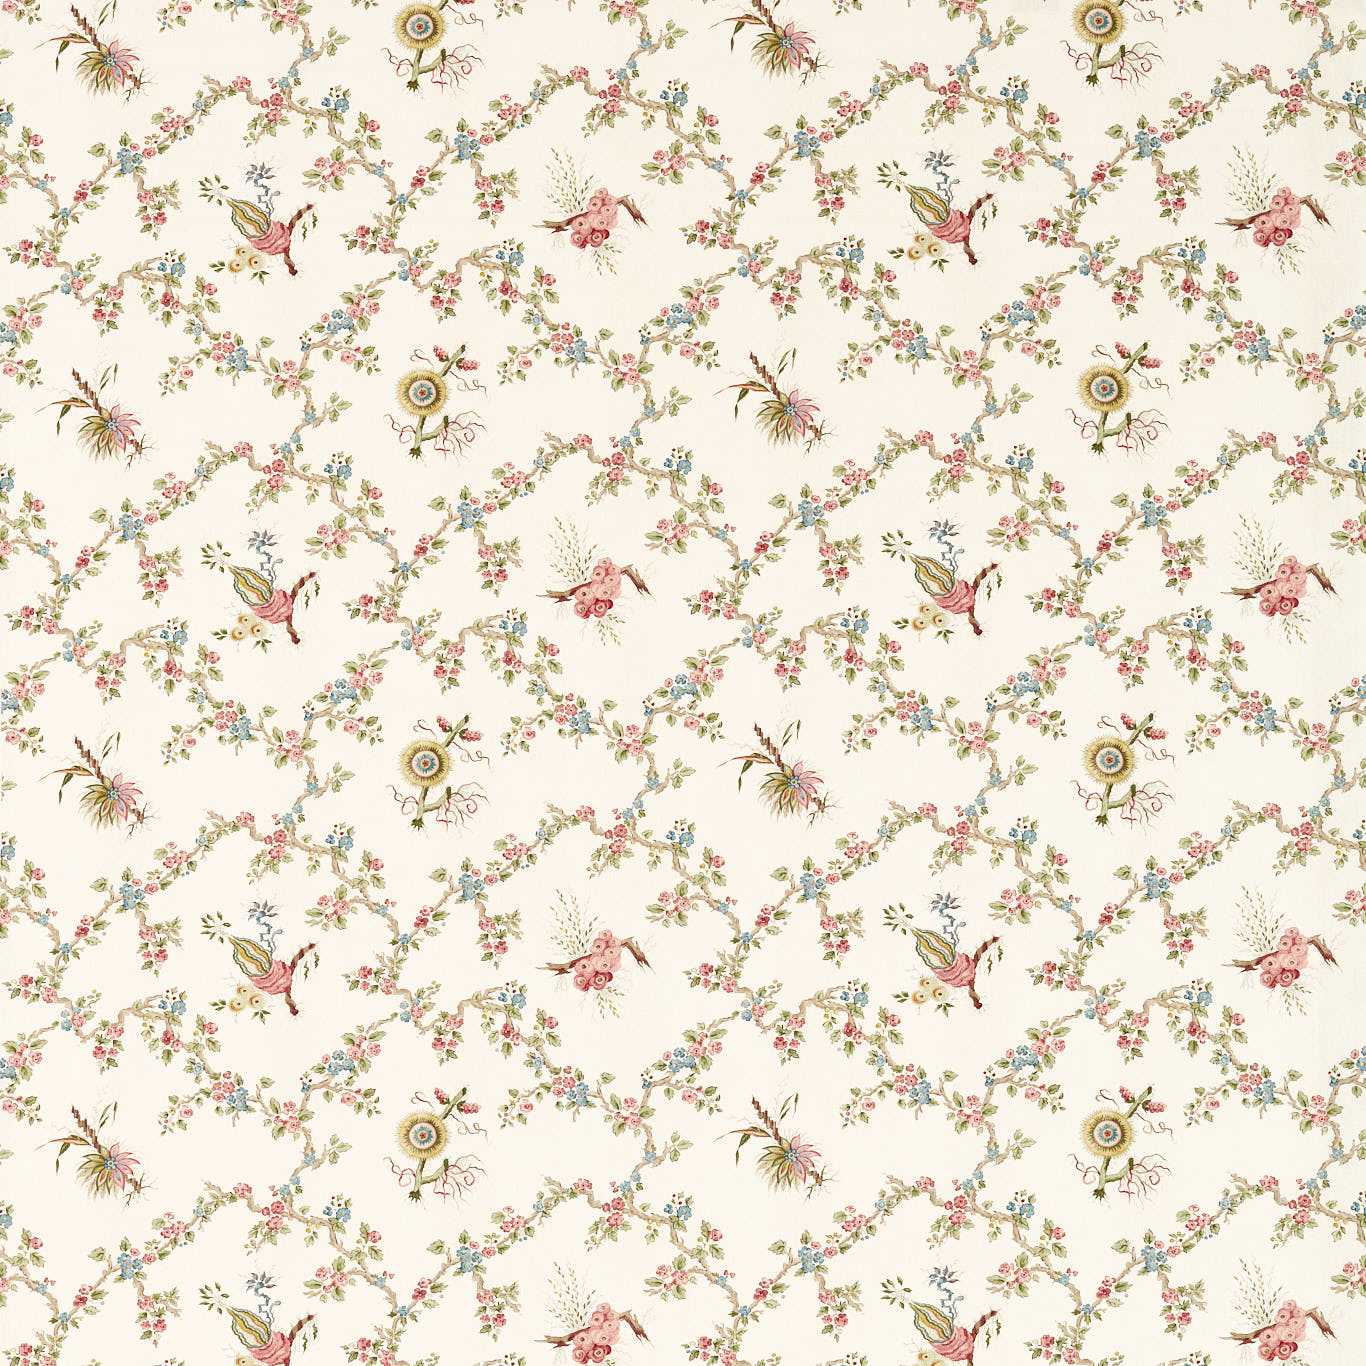 Trelliage Raspberry/Stone Fabric by SAN